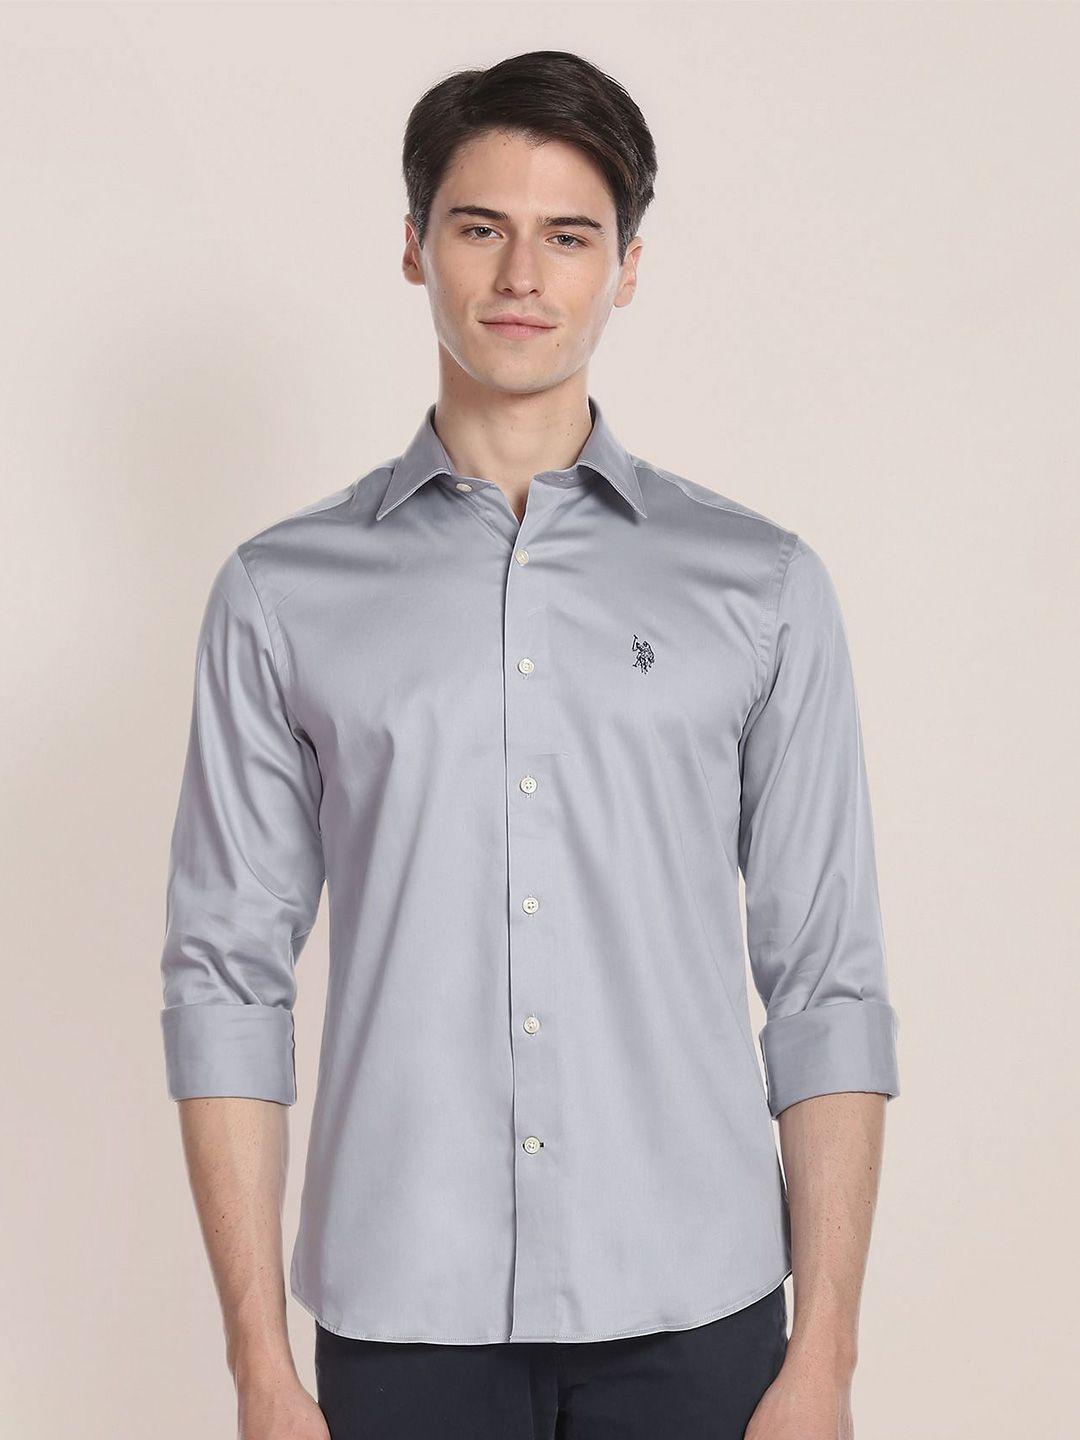 u.s. polo assn. spread collar regular fit cotton casual shirt